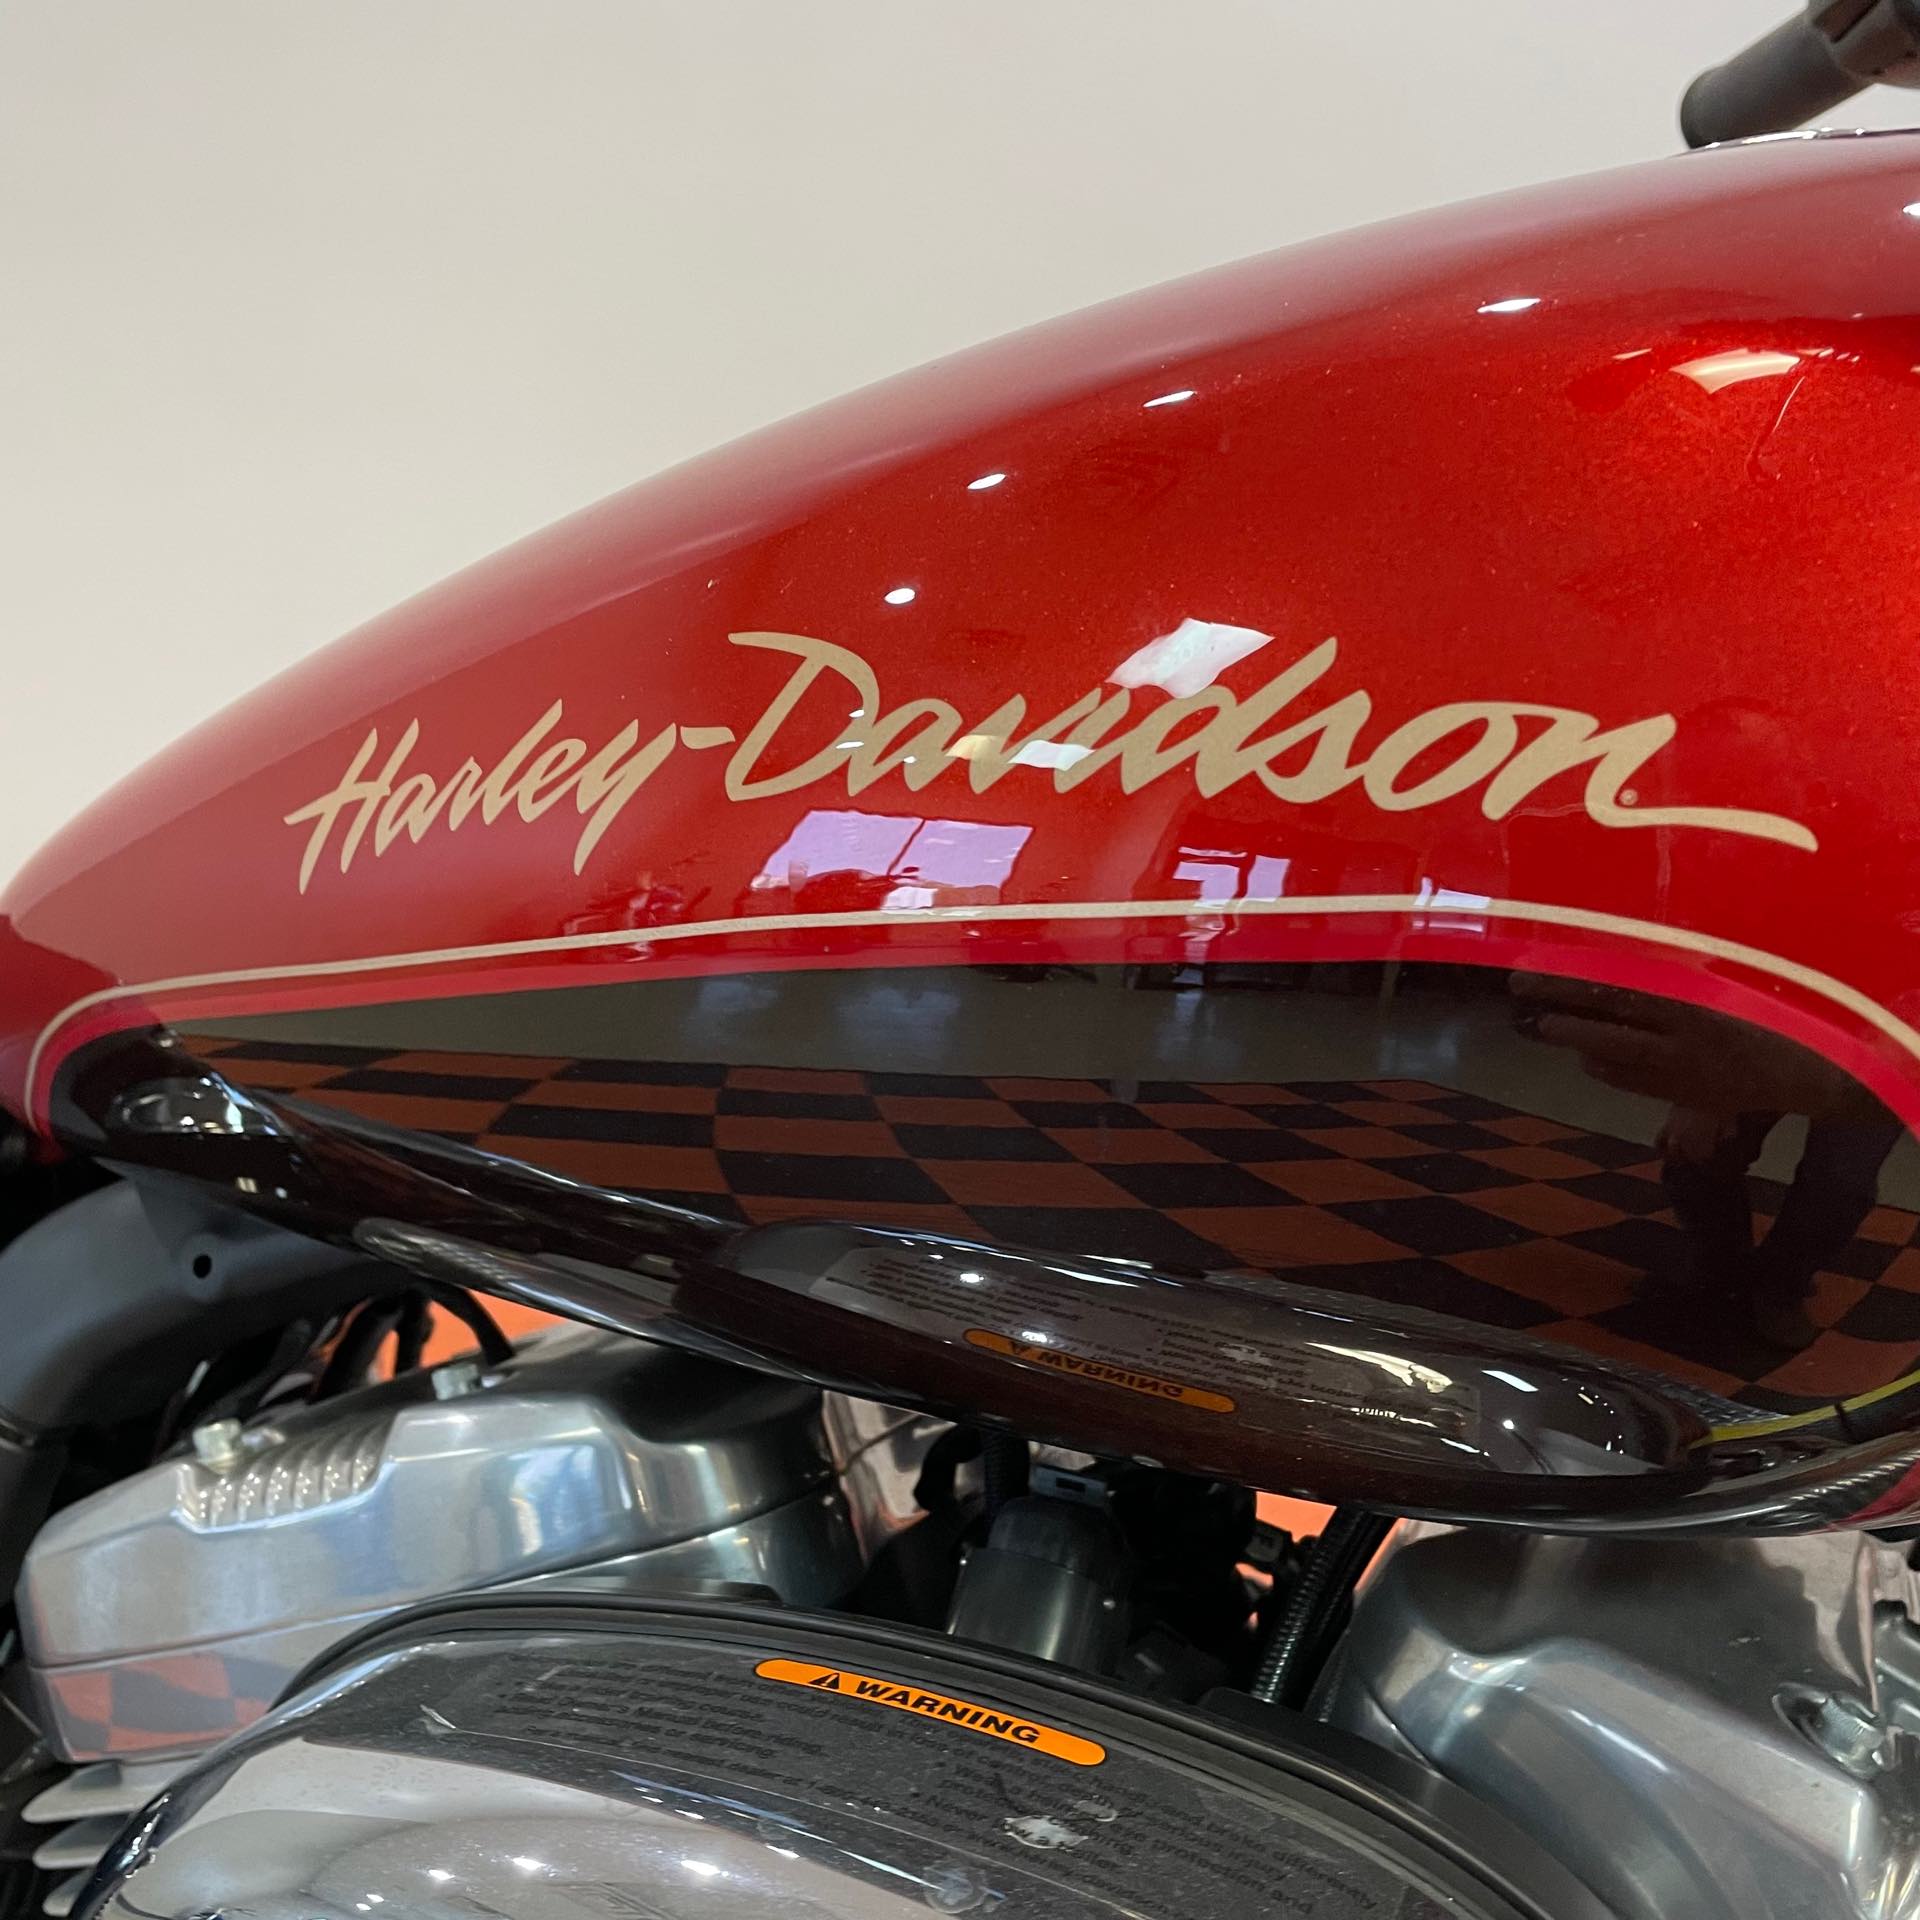 2013 Harley-Davidson Sportster SuperLow at Harley-Davidson of Indianapolis